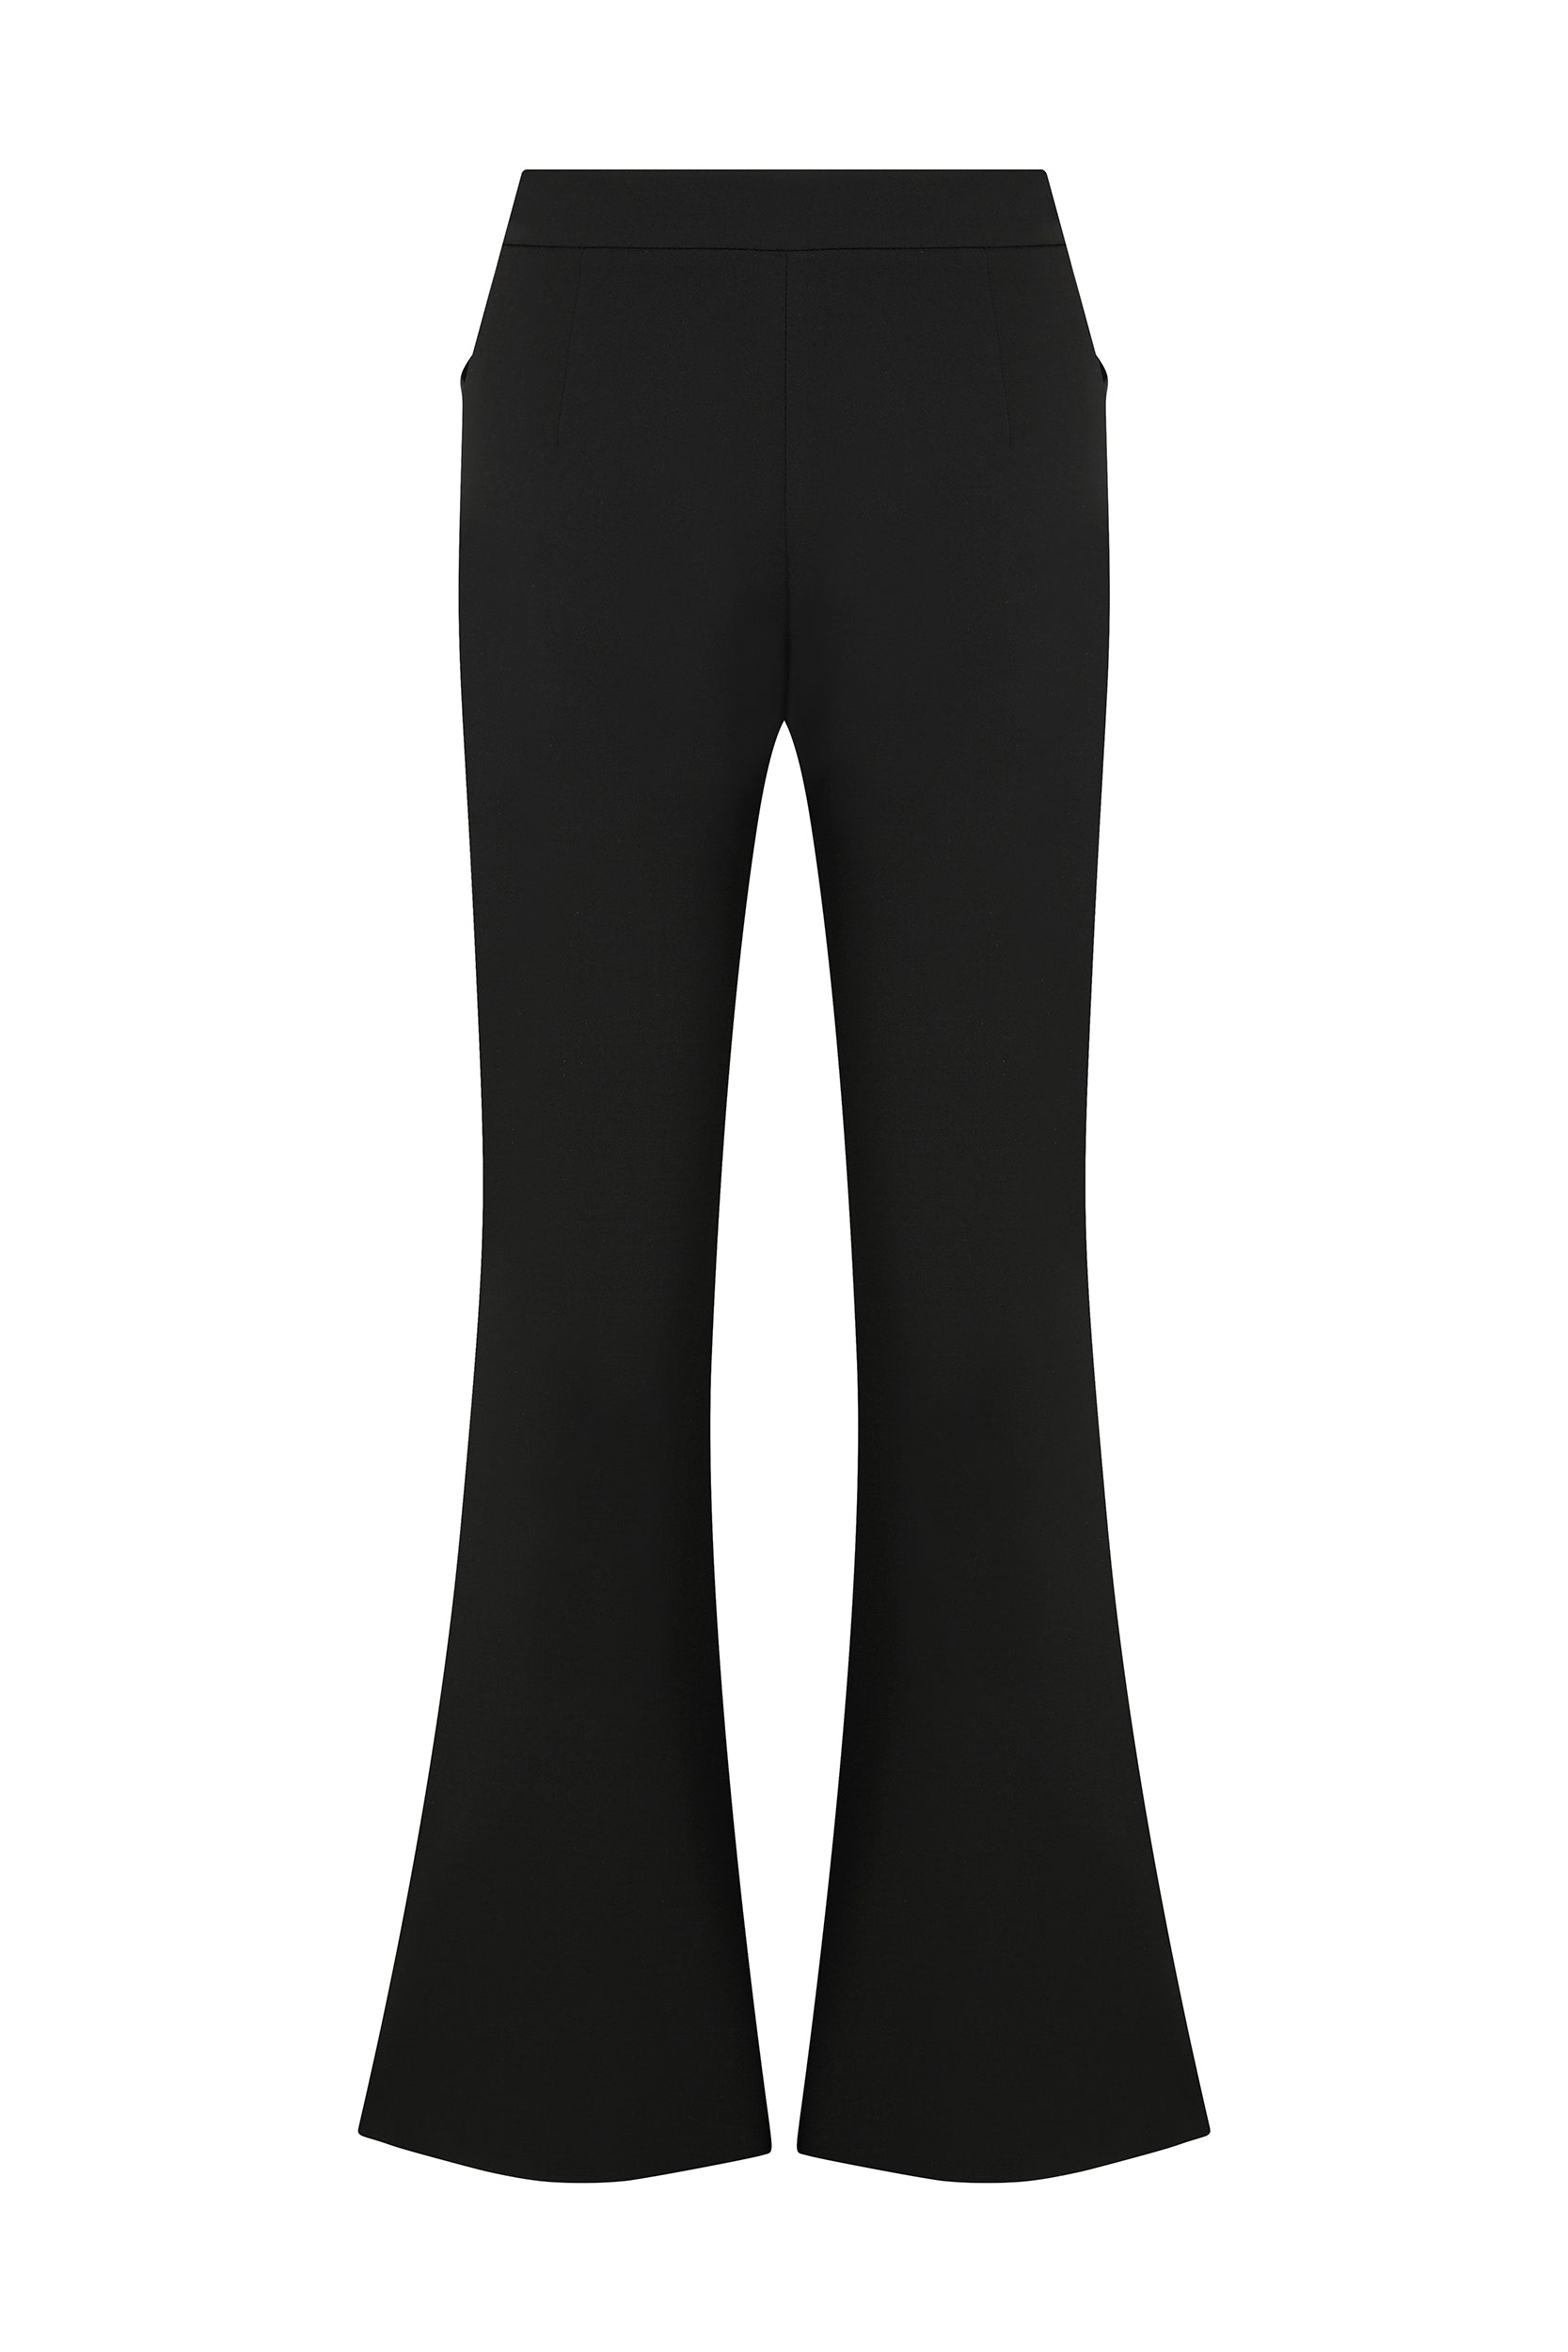 Fancy Pockets Black Slit Detailed Trousers -- [BLACK]